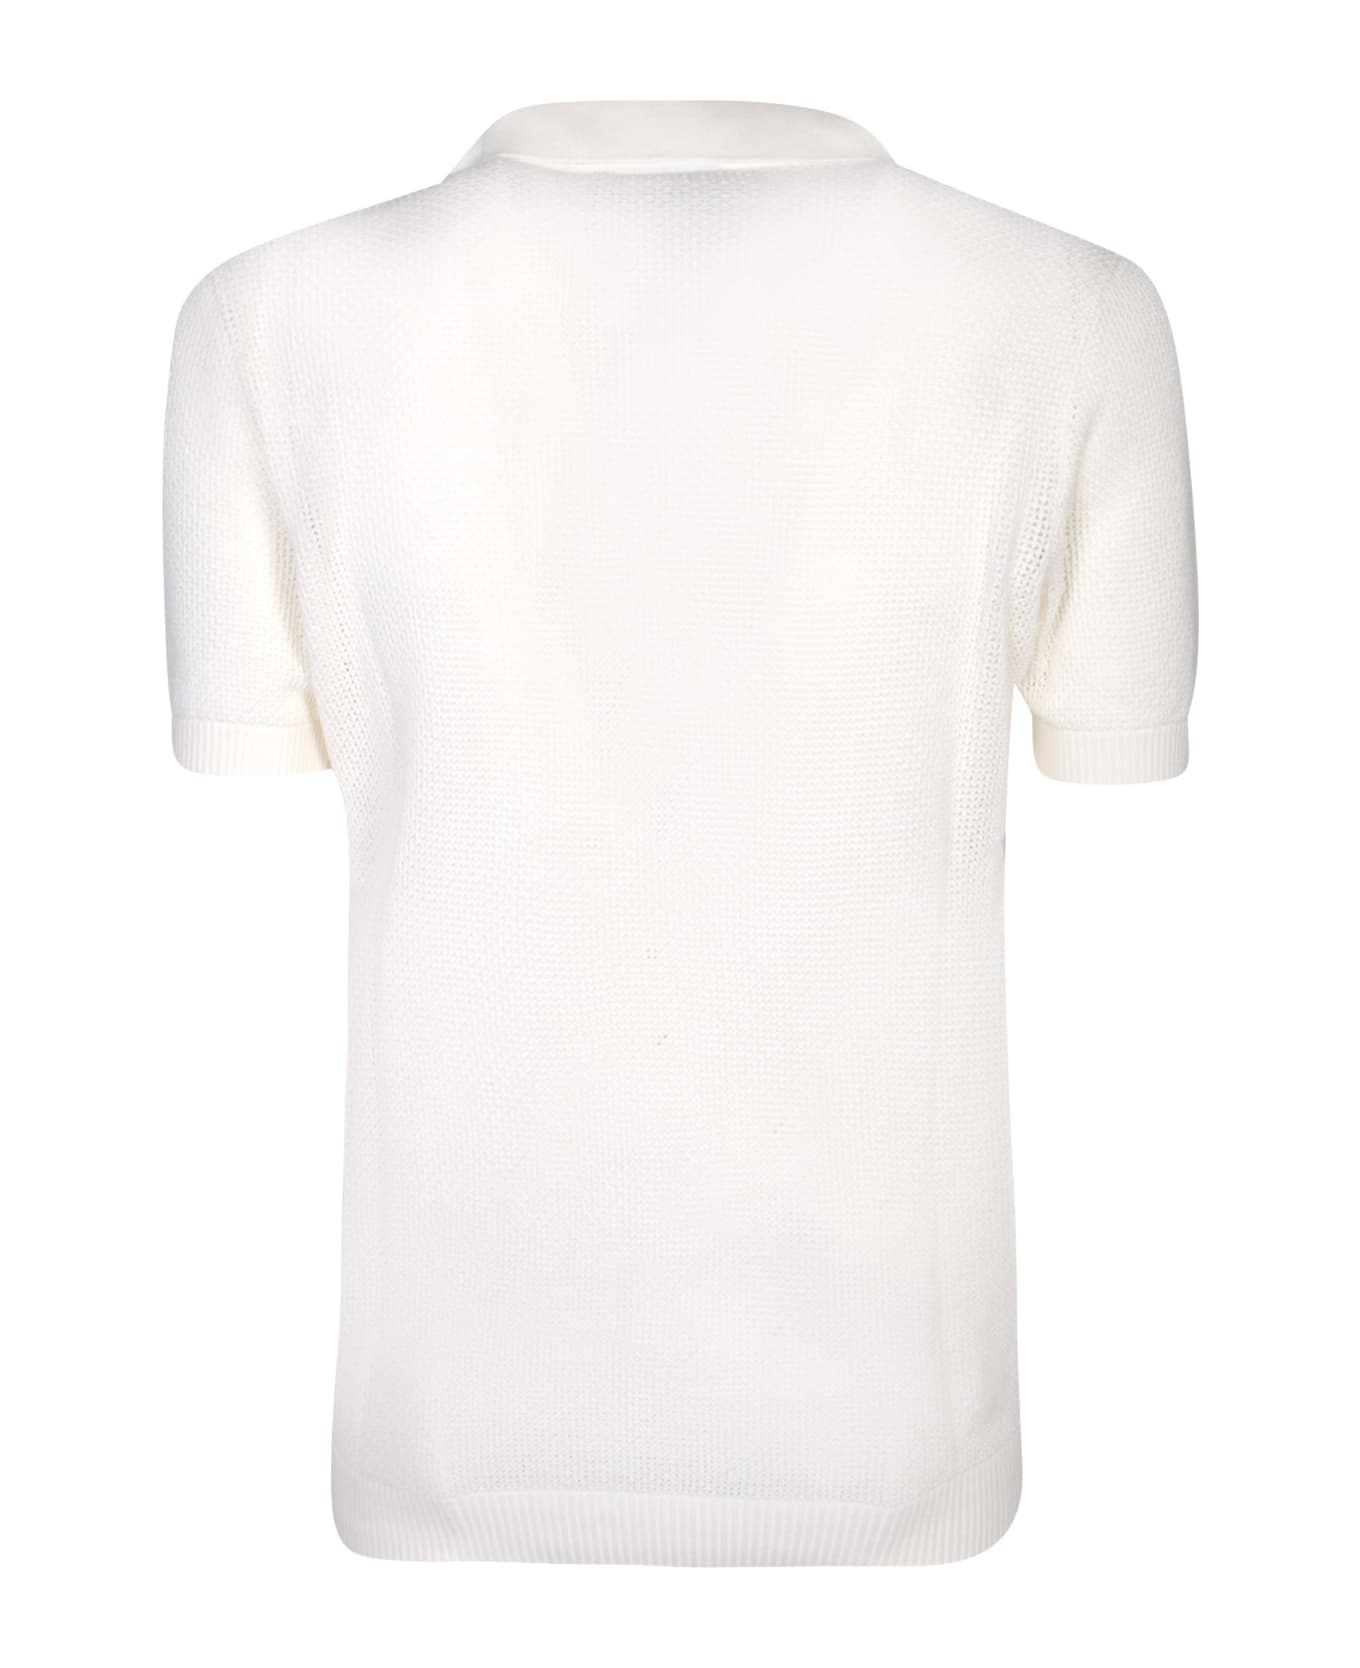 Tagliatore Crochet White Polo Shirt - White ポロシャツ